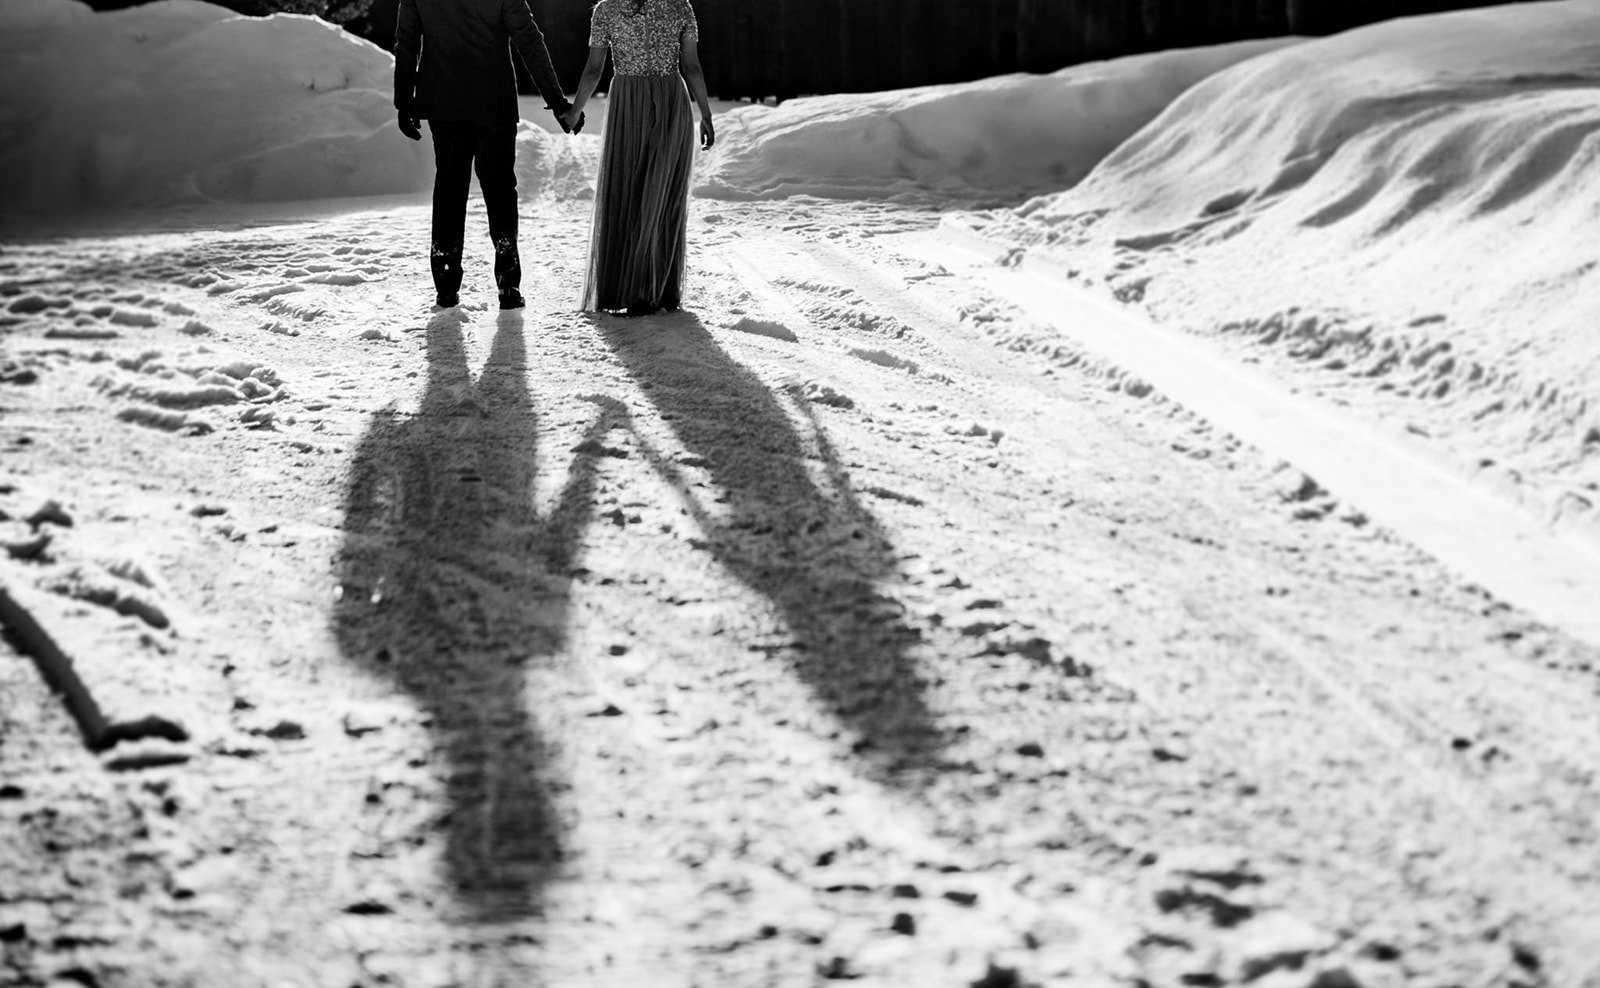 Winter wonderland in Inari, Lapland with beautiful couple